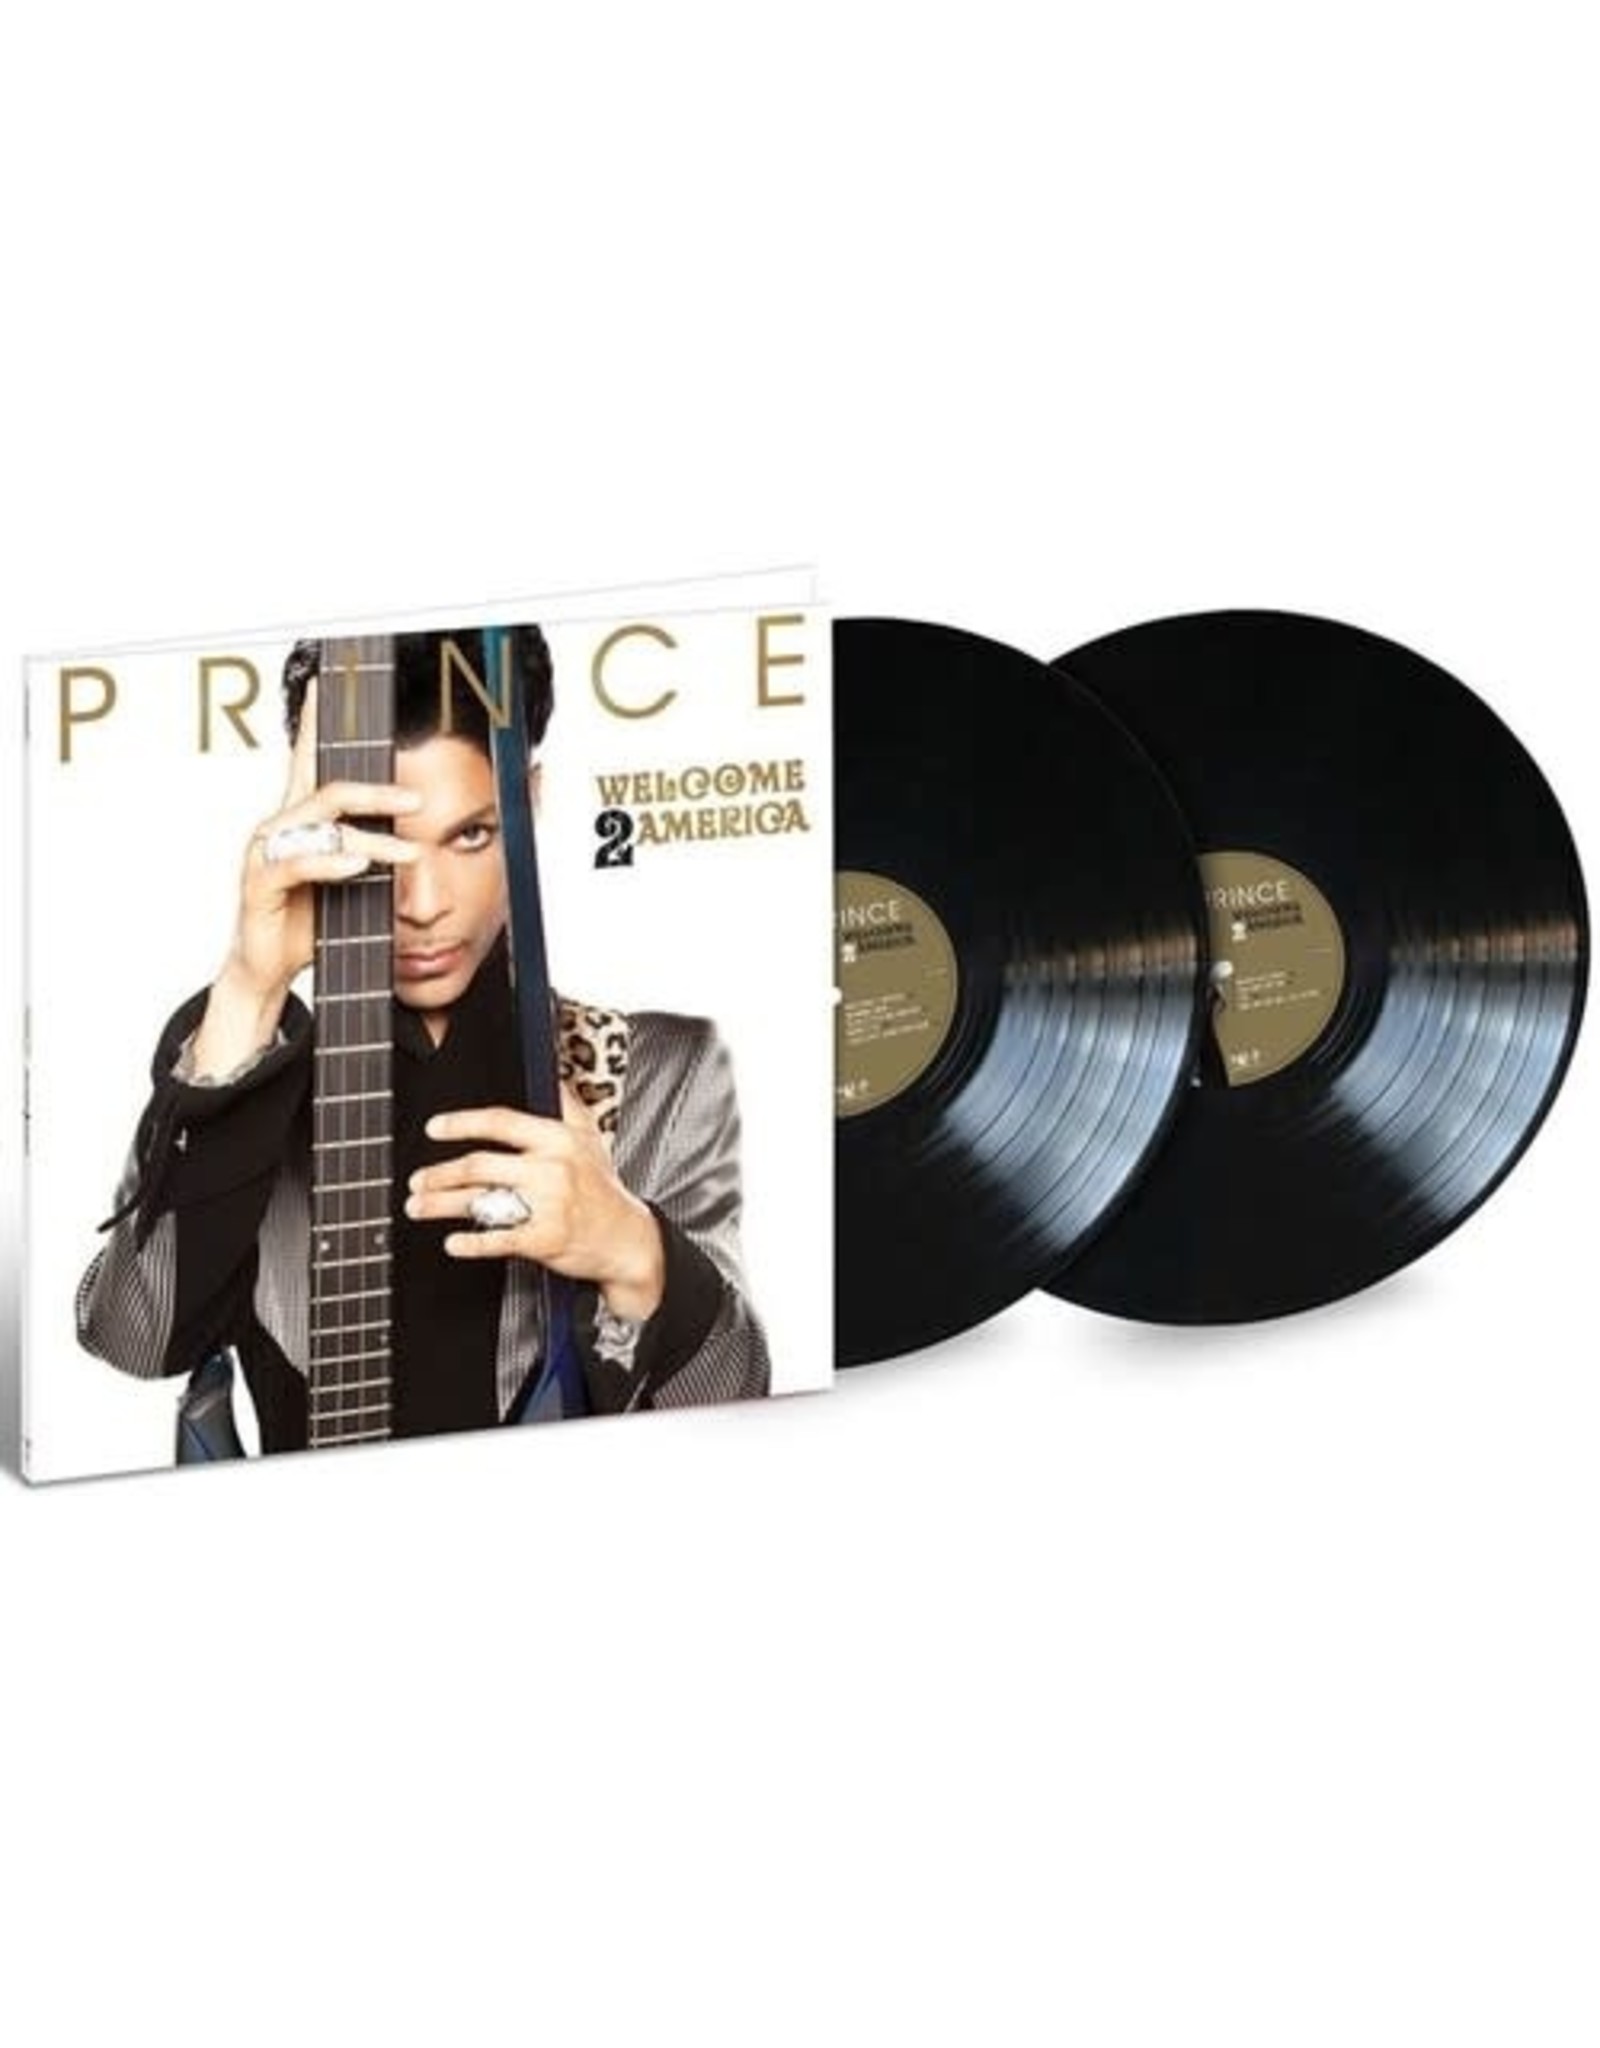 New Vinyl Prince - Welcome 2 America 2LP